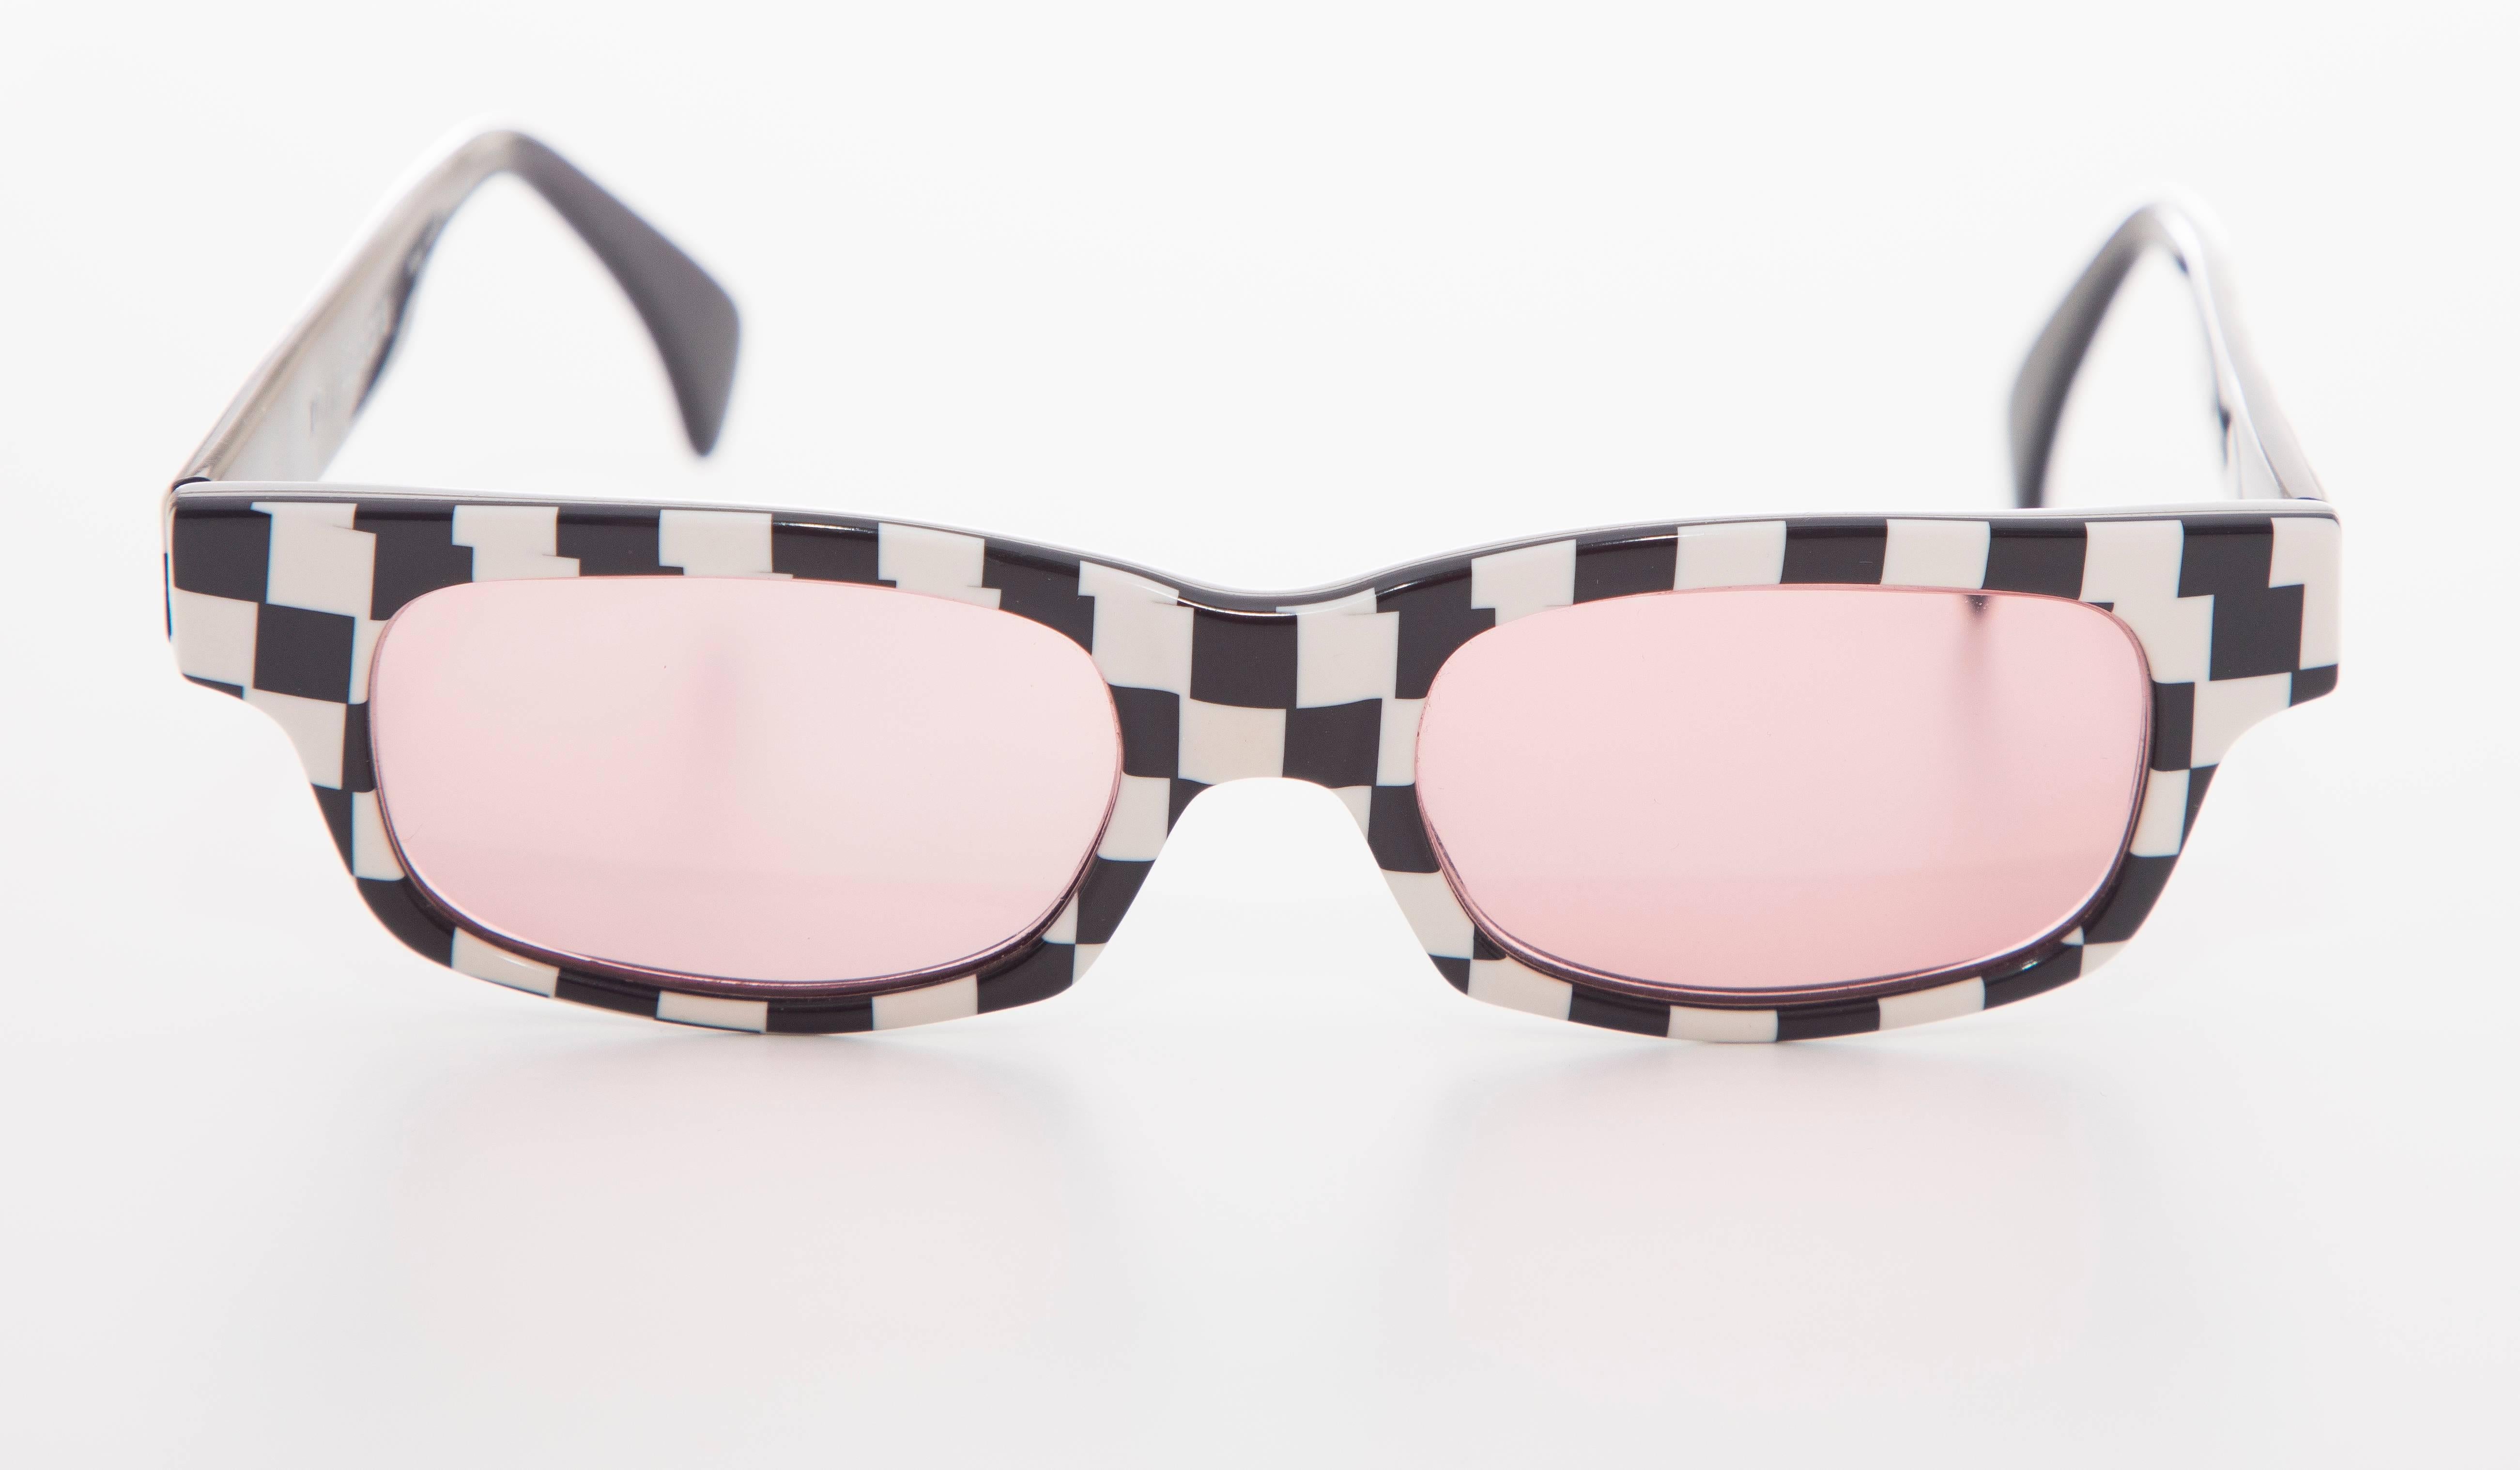 Alain Mikli Paris, Circa 1980's checkerboard sunglasses.